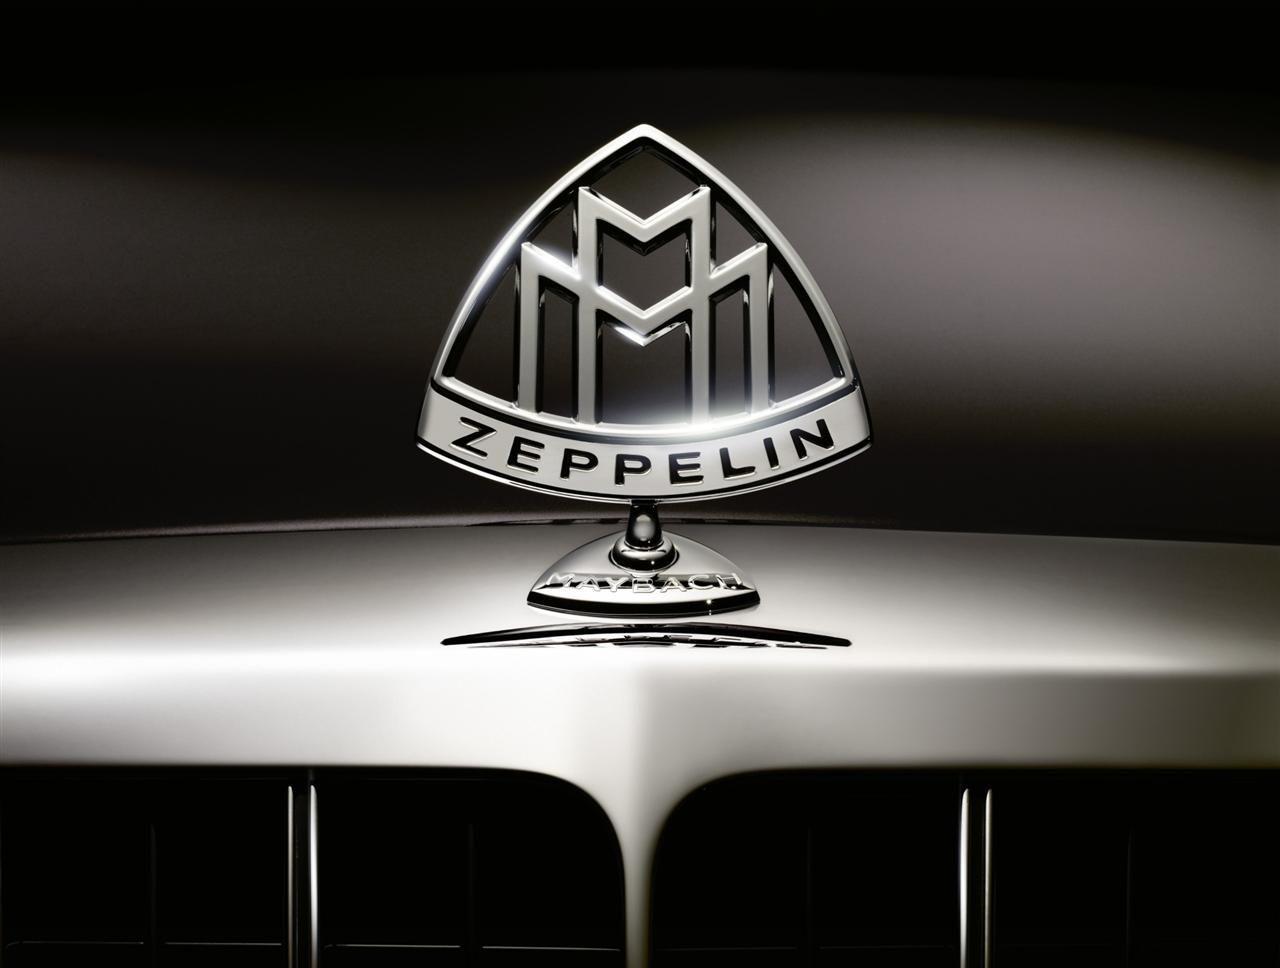 Old Maybach Logo - Zeppelin hood ornament | Car Hood Ornaments Classics on Pinterest ...